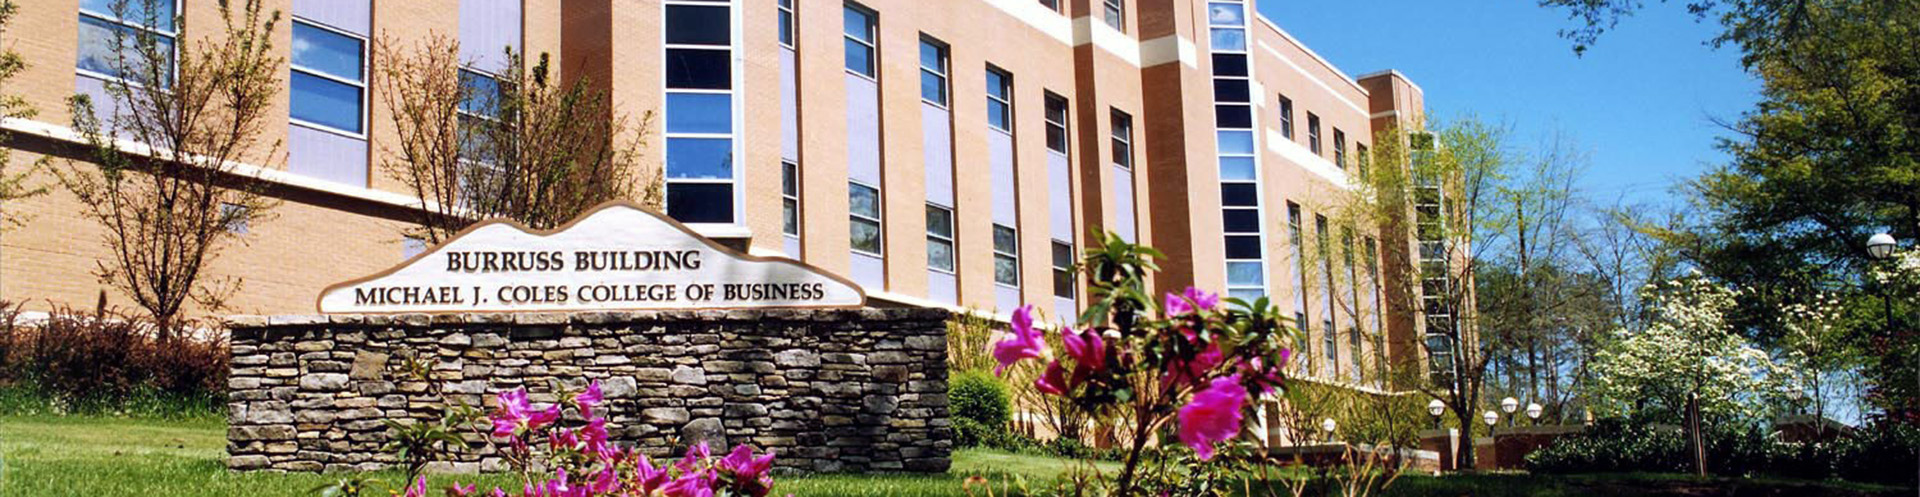 Coles College of Business Burruss Building.